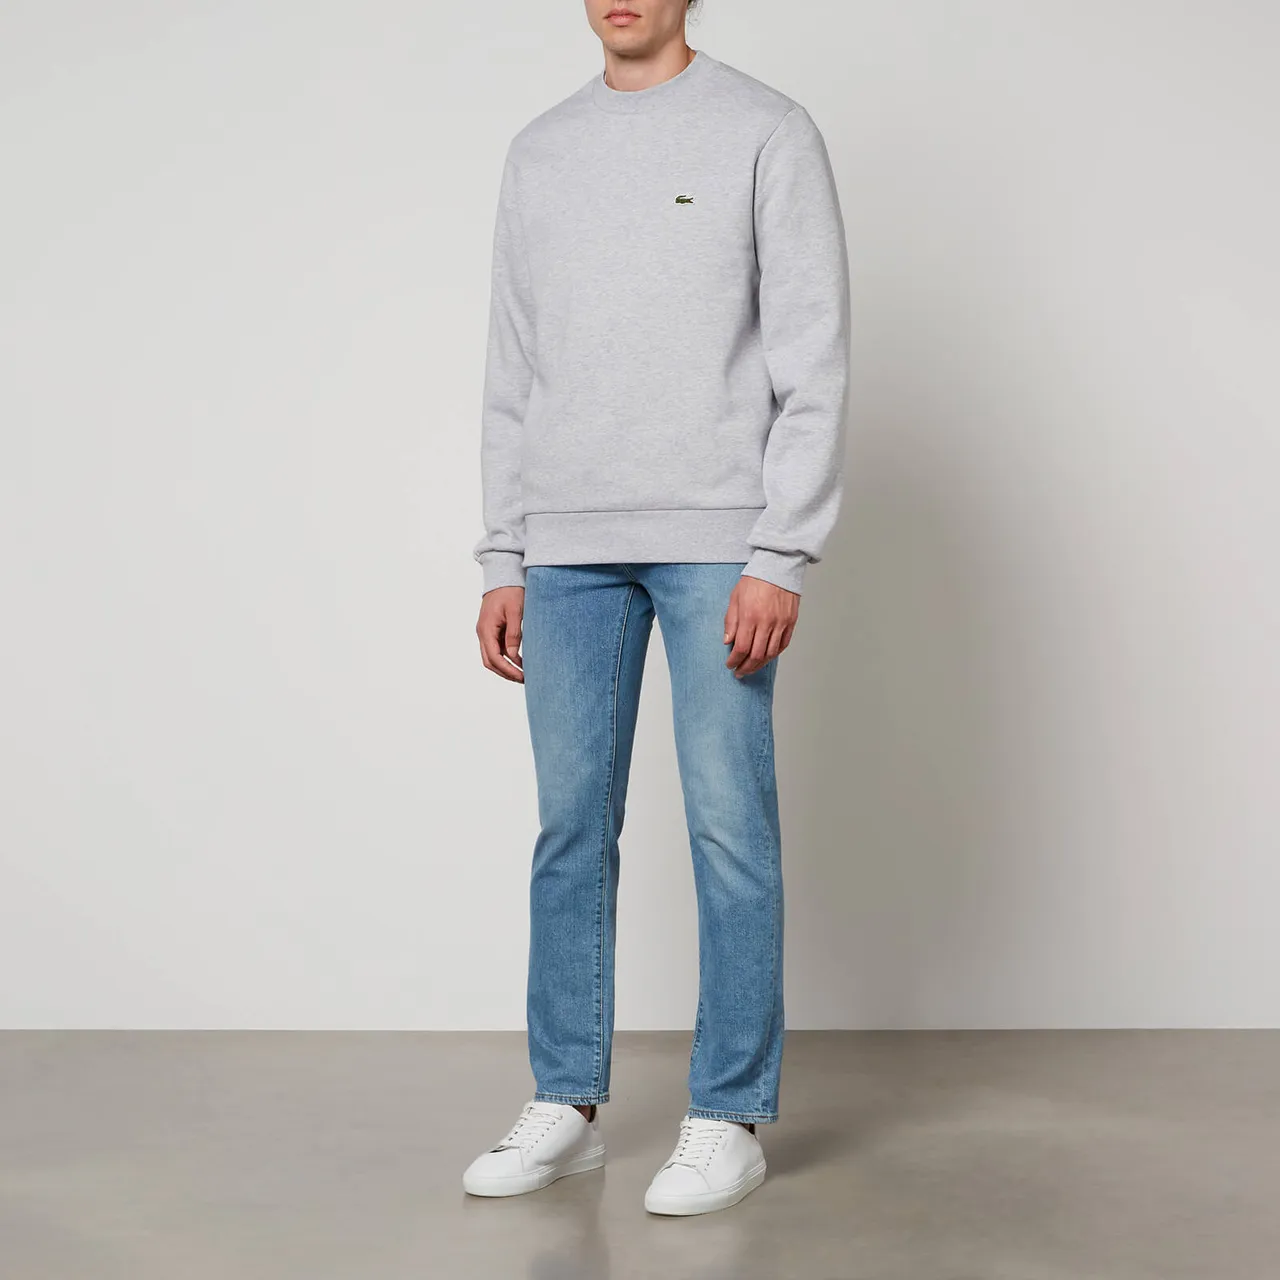 Lacoste Classic Cotton-Blend Jersey Sweatshirt - 5/